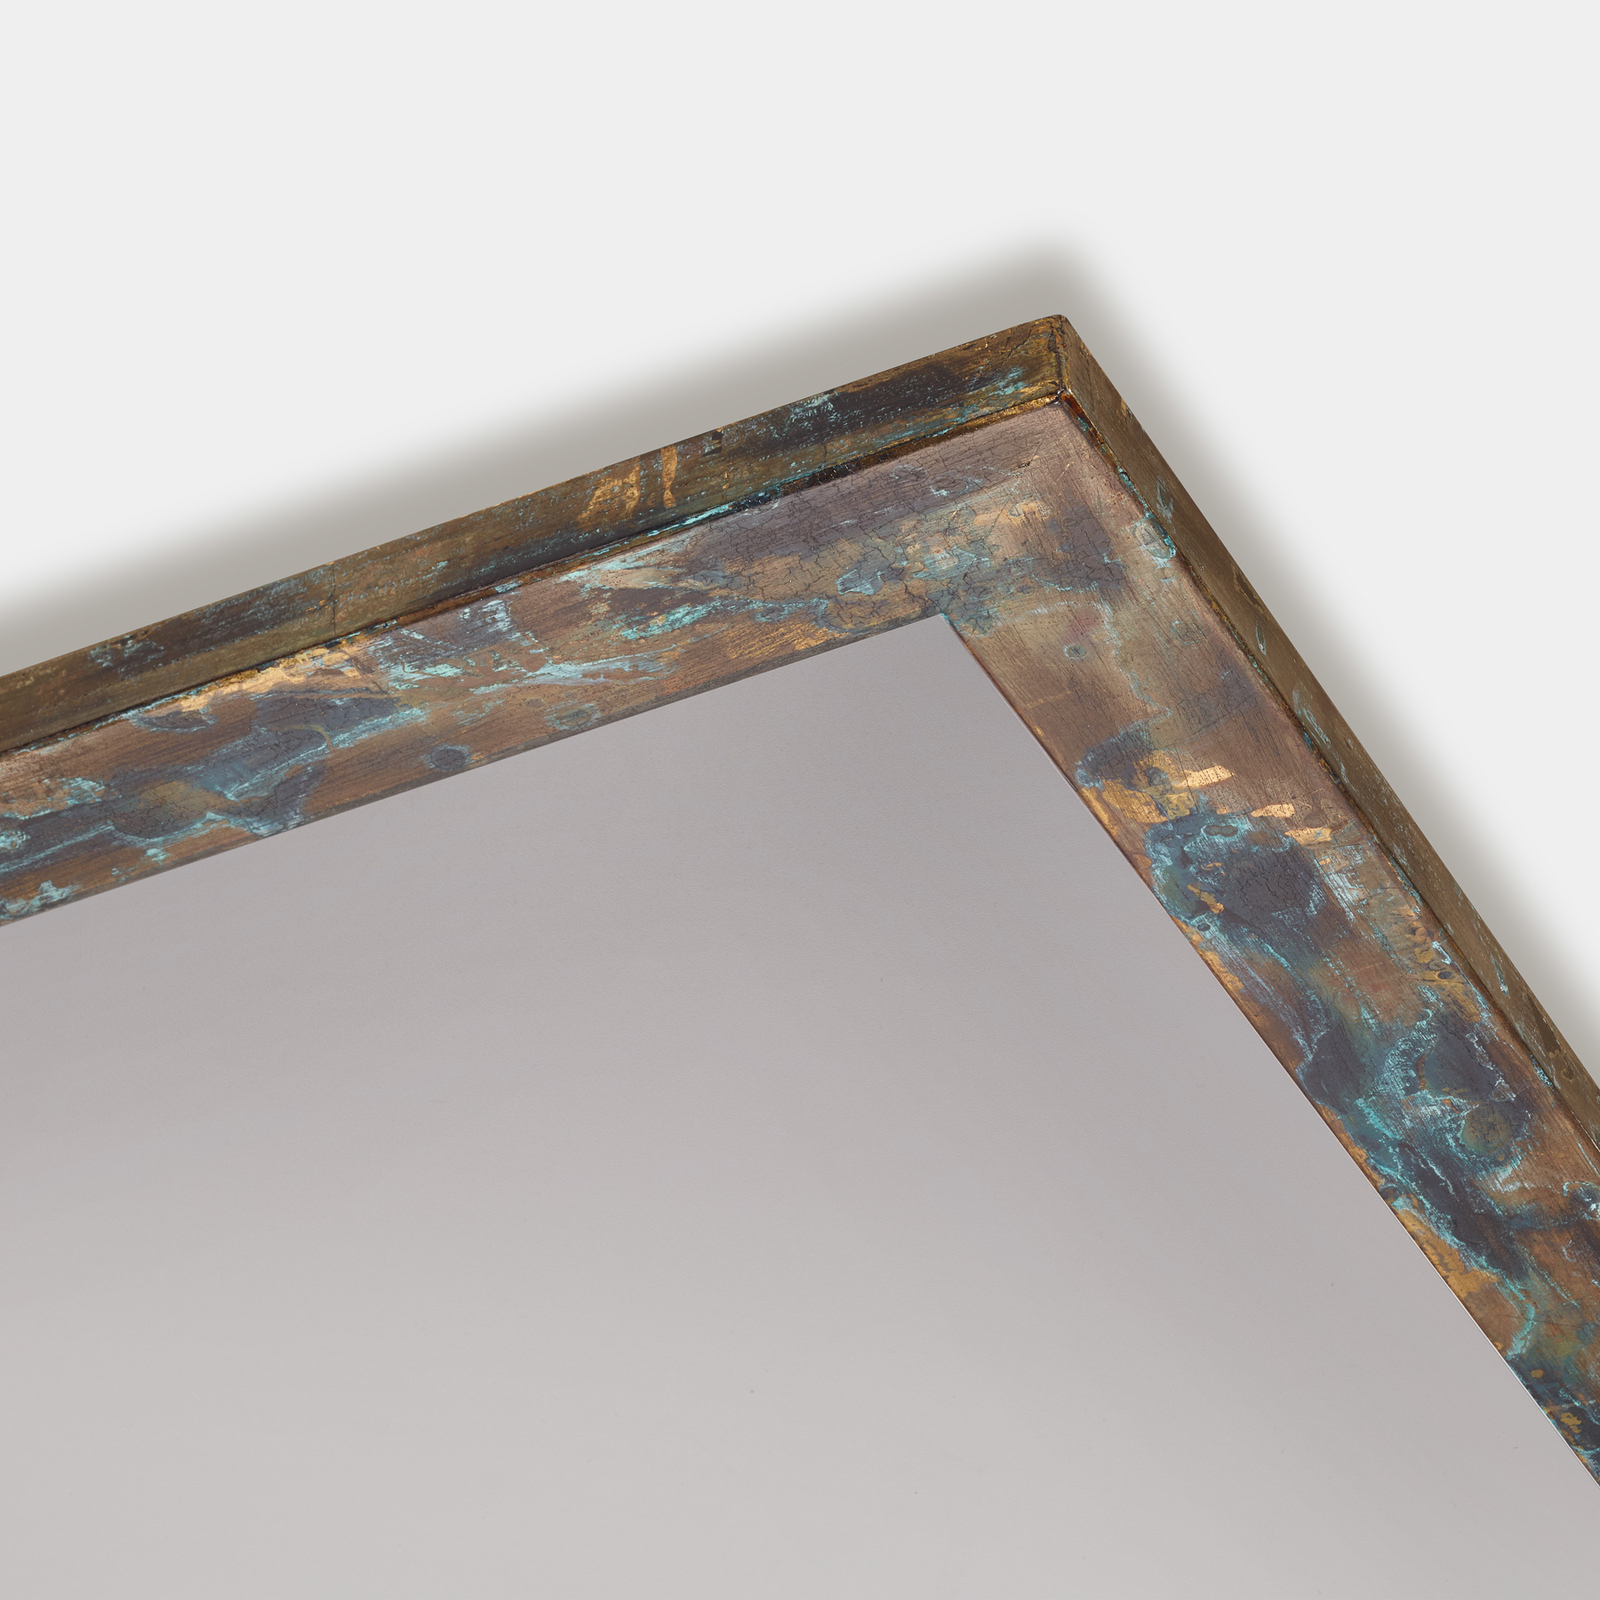 Plošča Quitani Aurinor LED, zlata patina, 68 cm